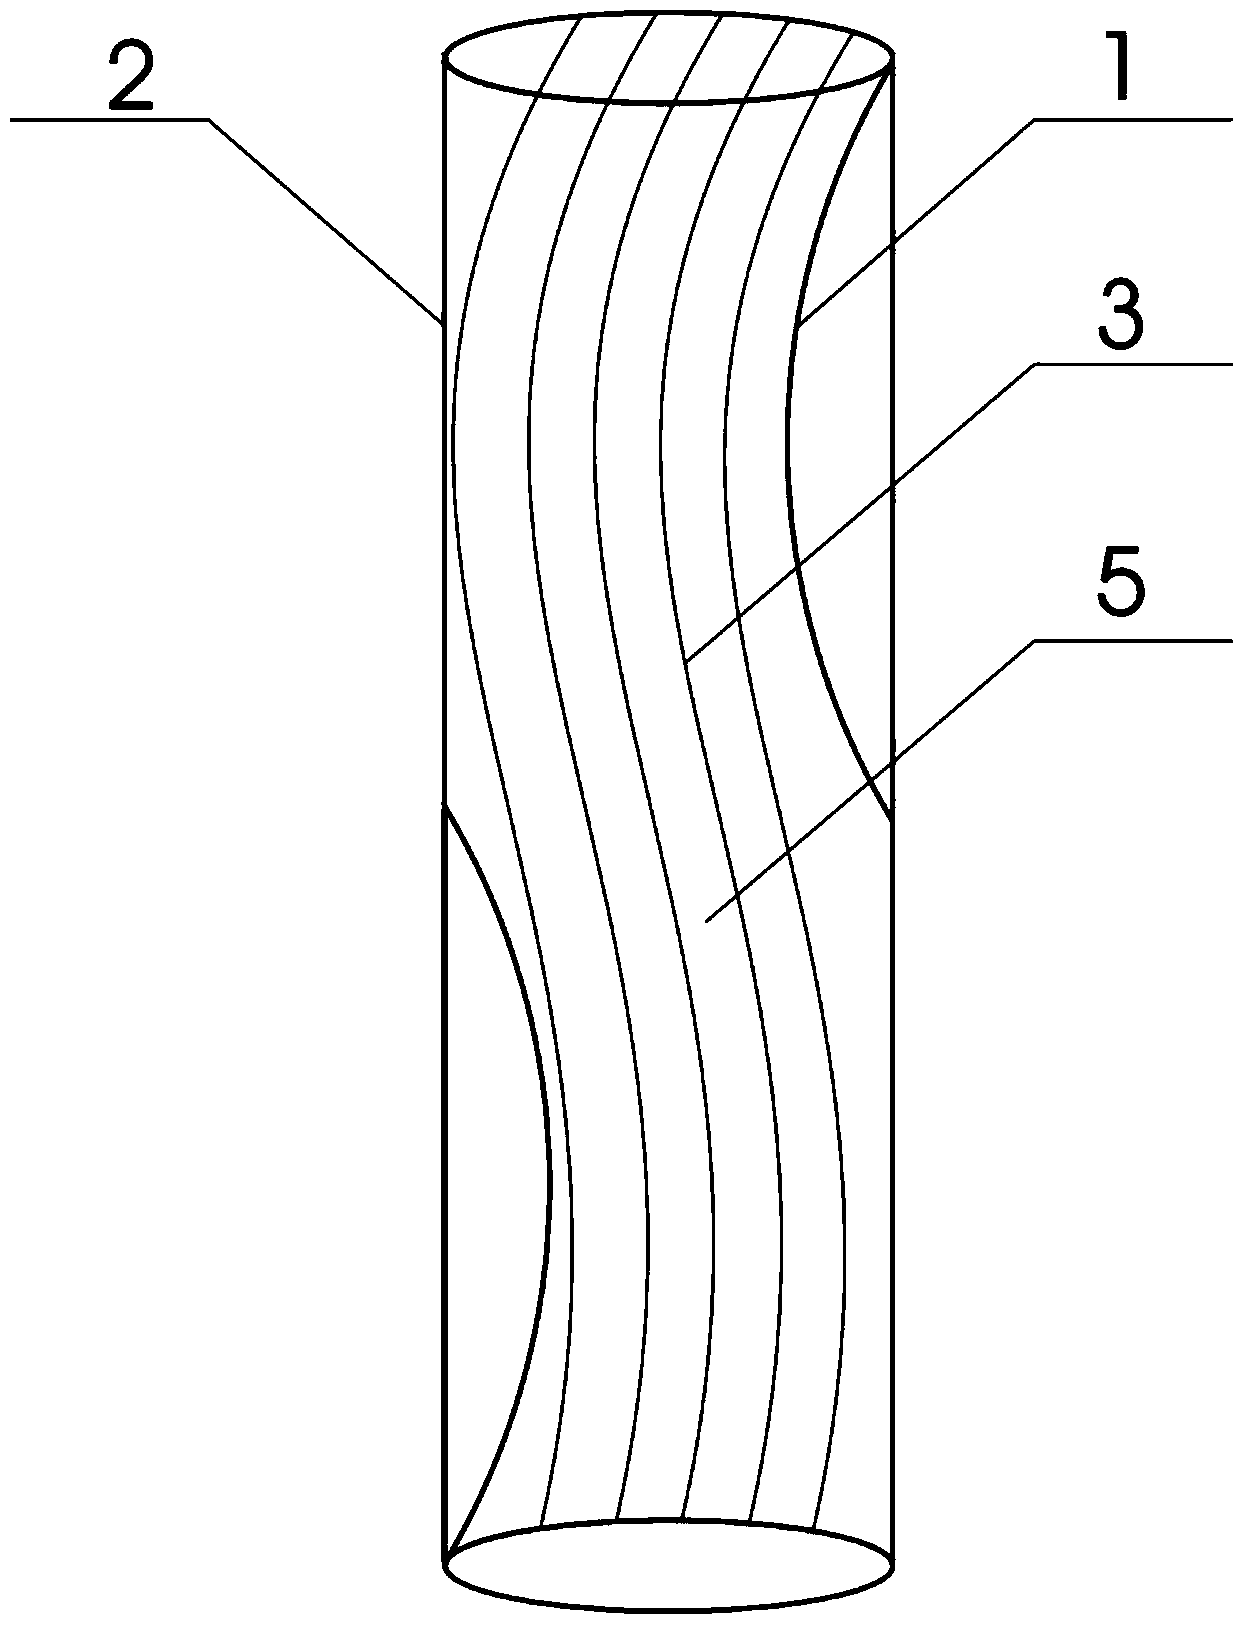 UPVC (unplasticized polyvinyl chloride) hollow-wall internal spiral tube